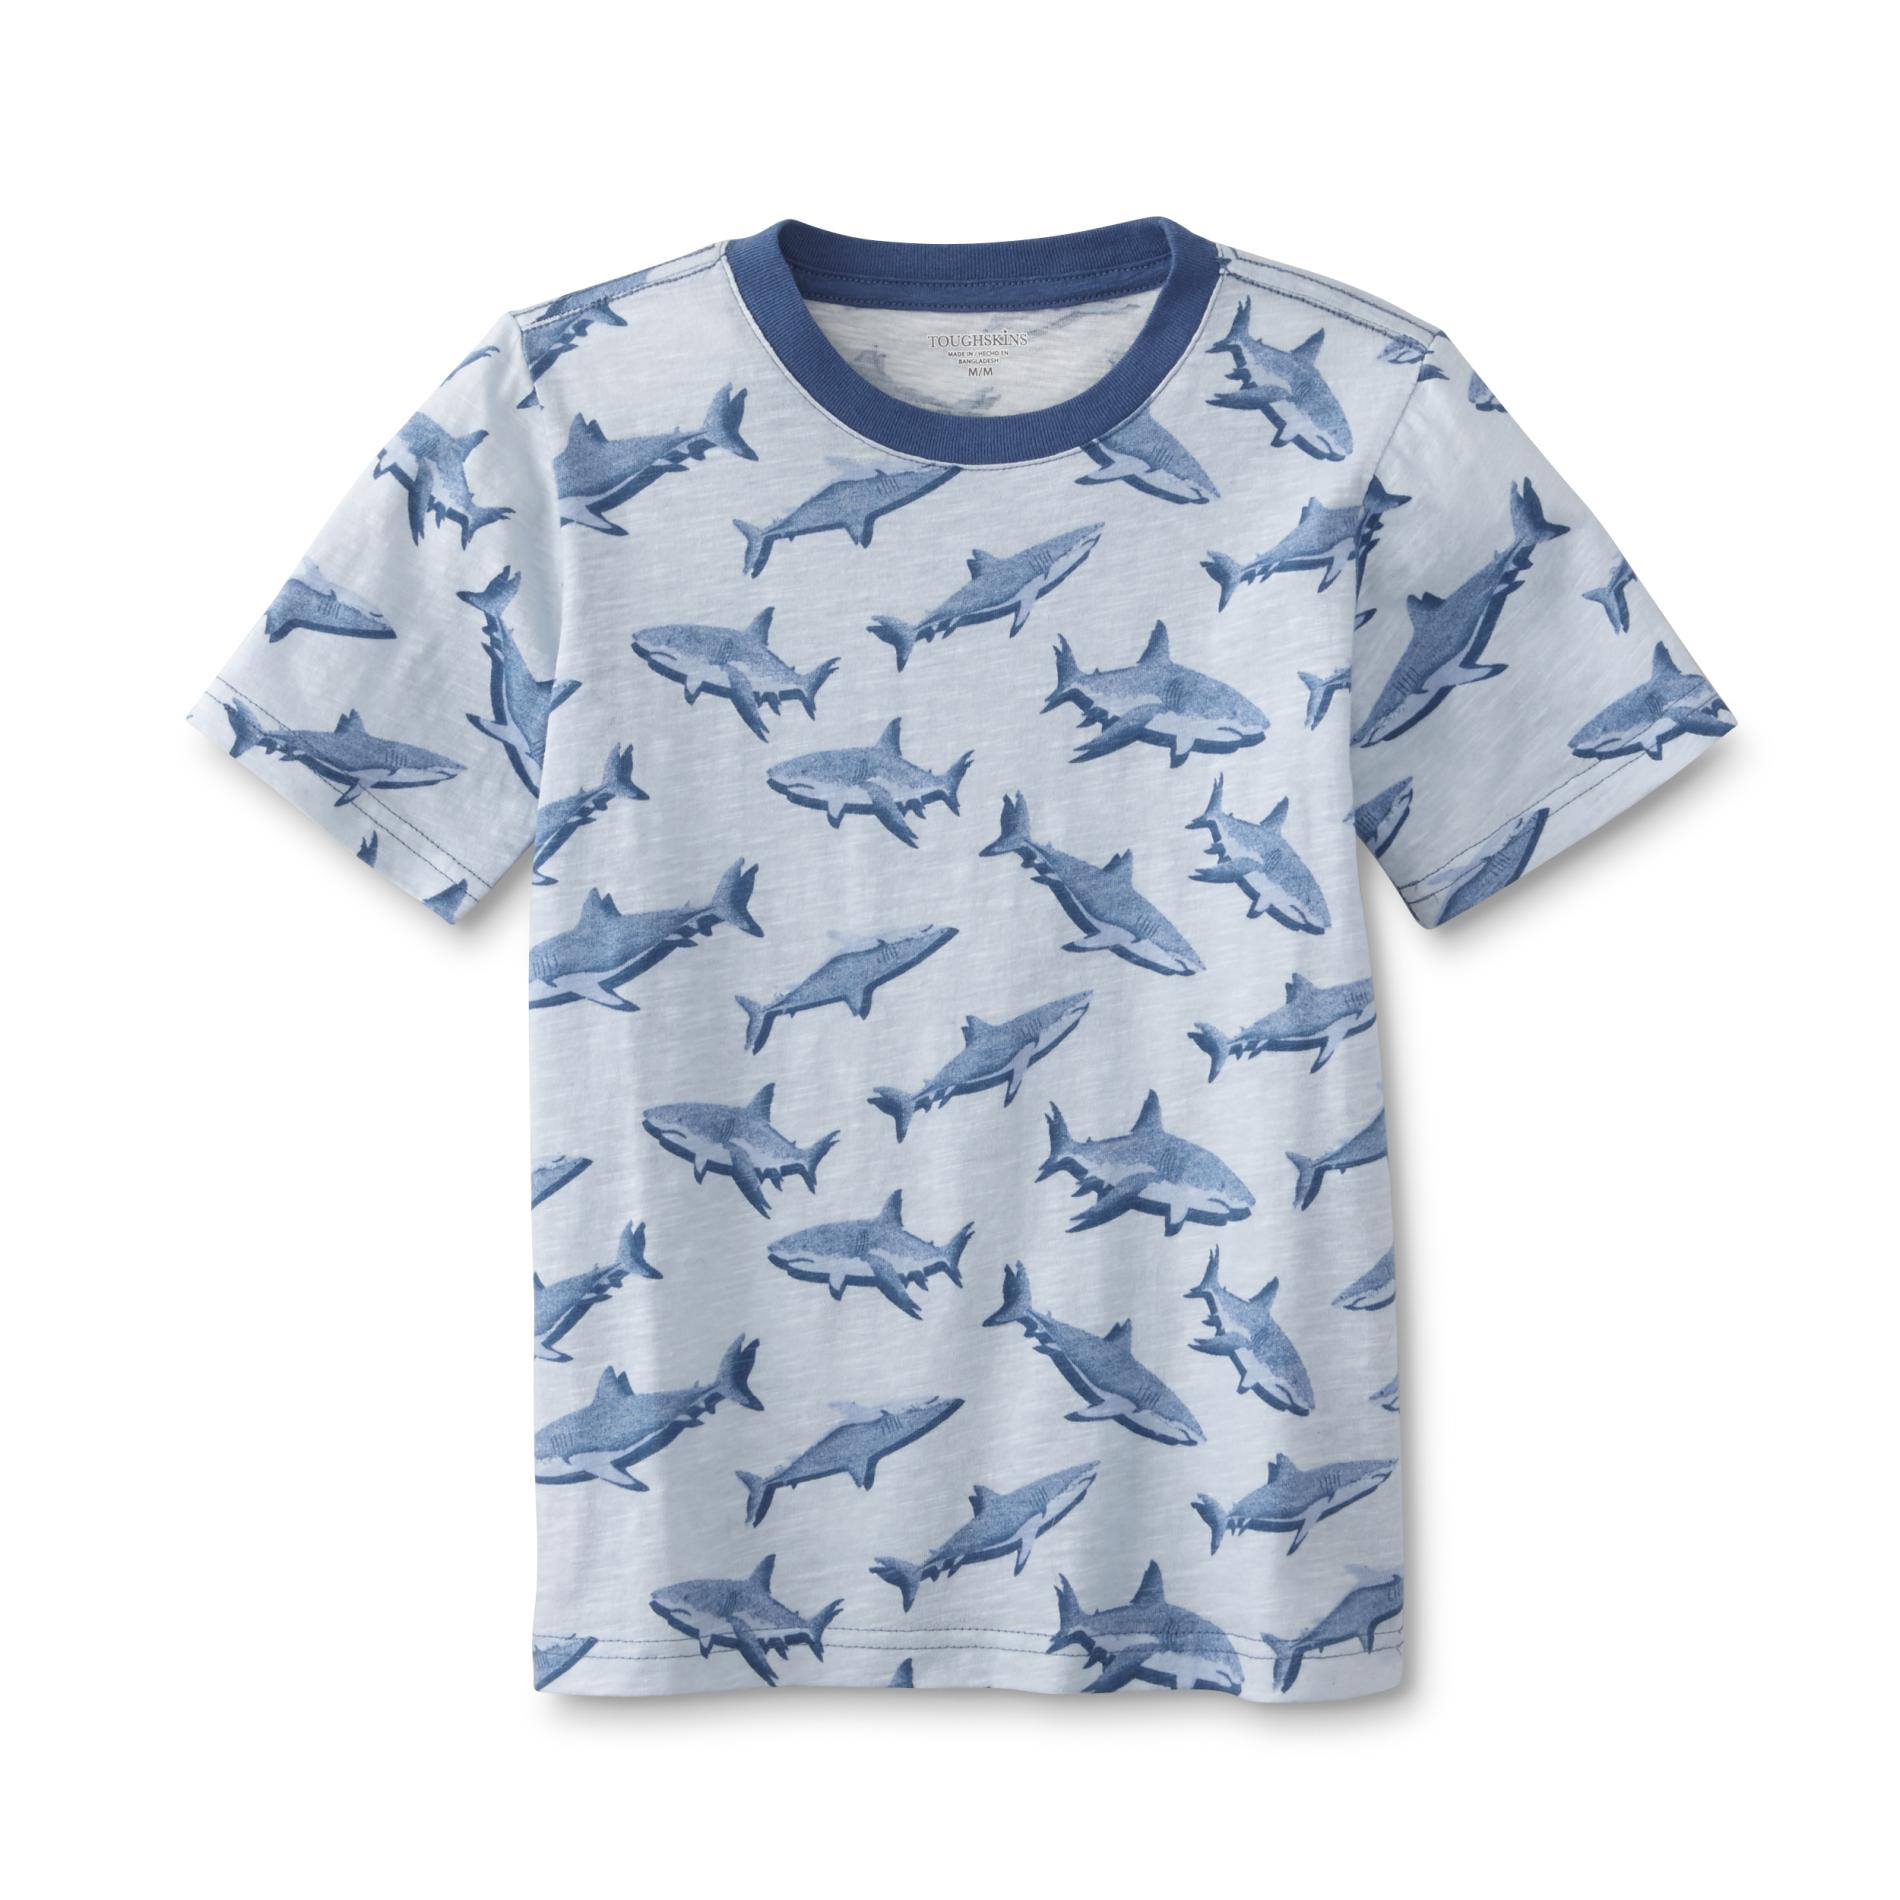 Toughskins Infant & Toddler Boys' Graphic T-Shirt - Sharks